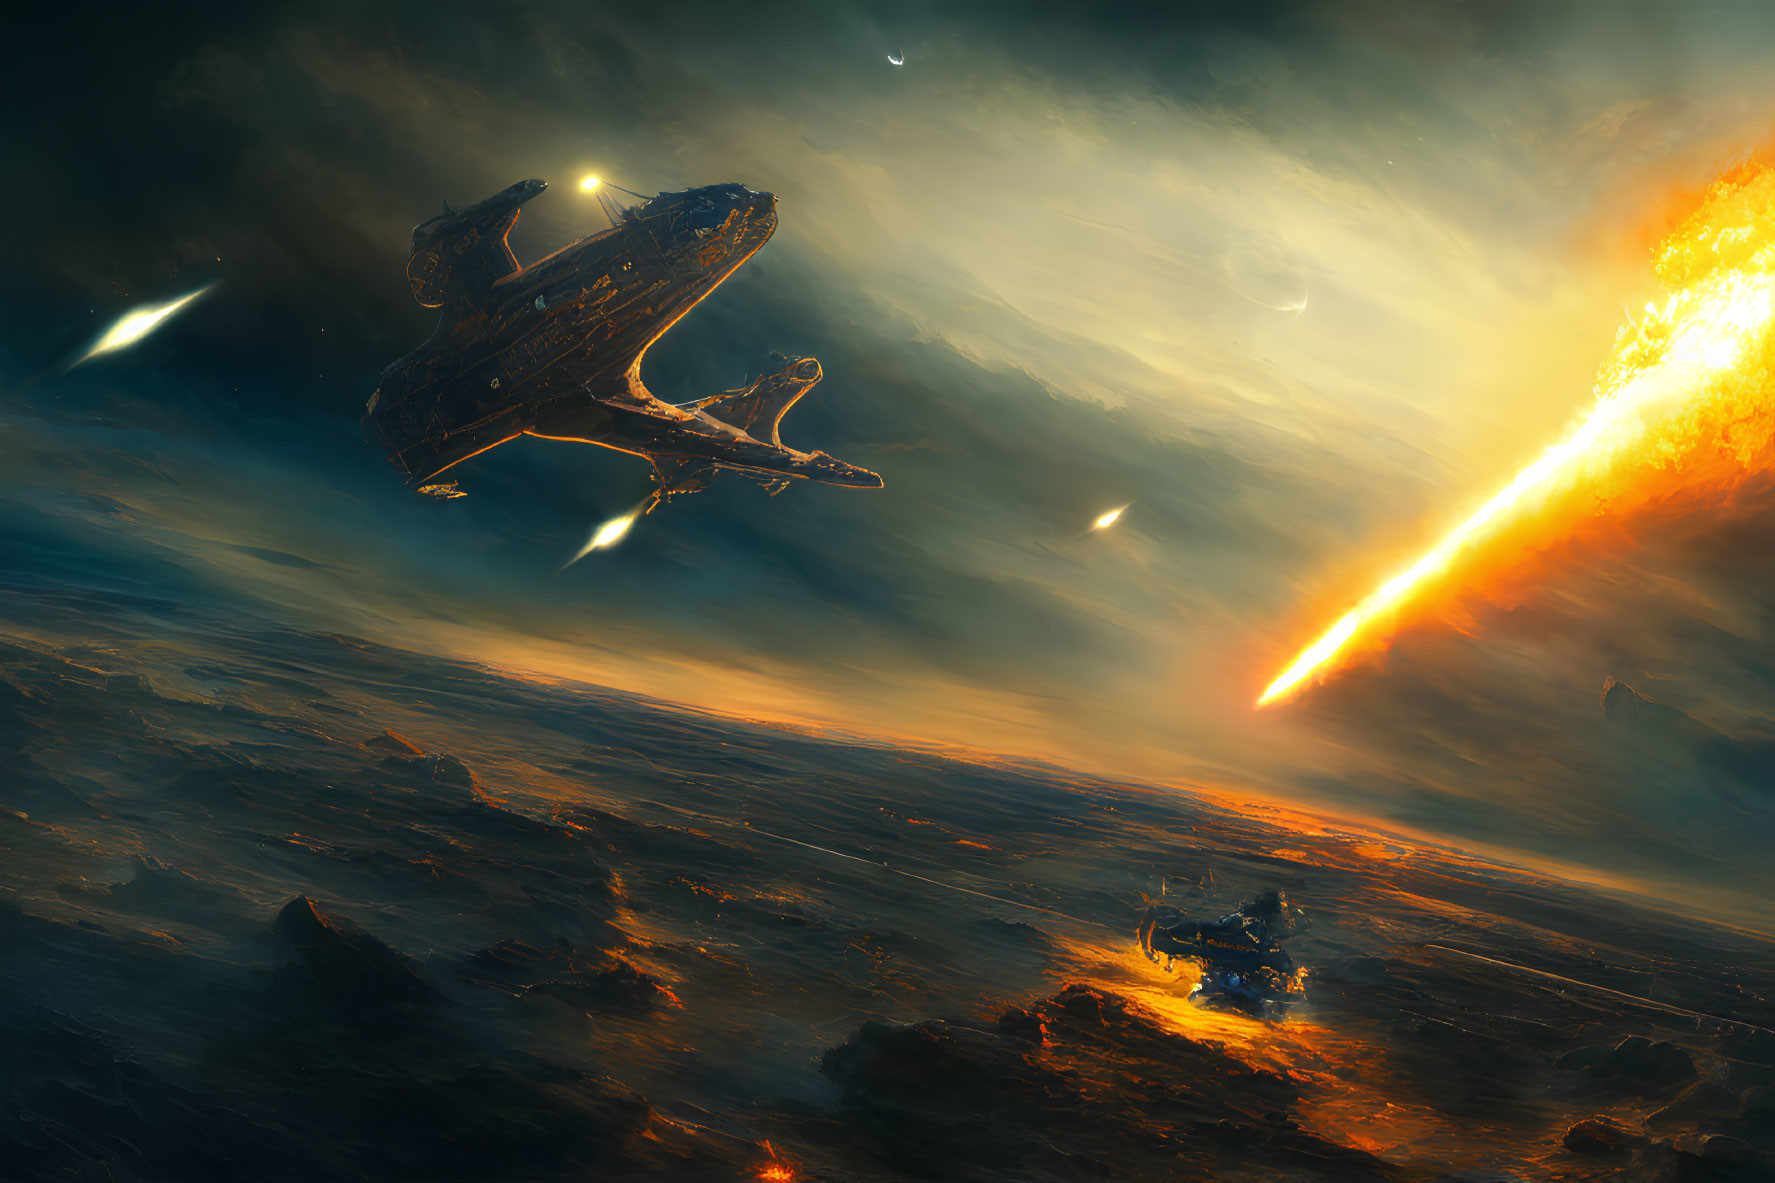 Spaceship fleeing planet with fiery comet in alien sky